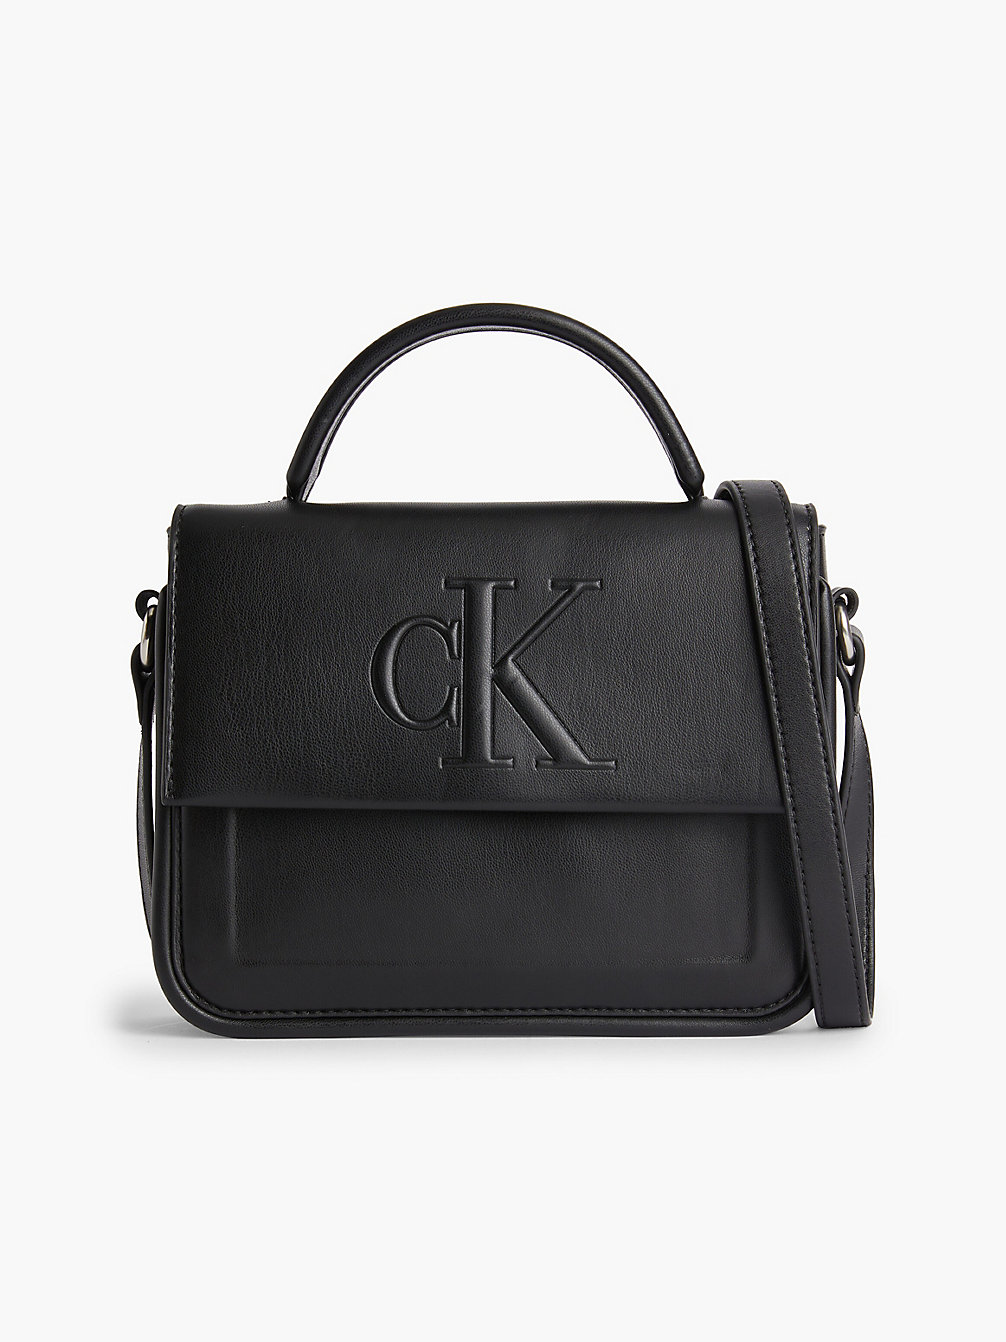 BLACK Crossbody Bag undefined women Calvin Klein